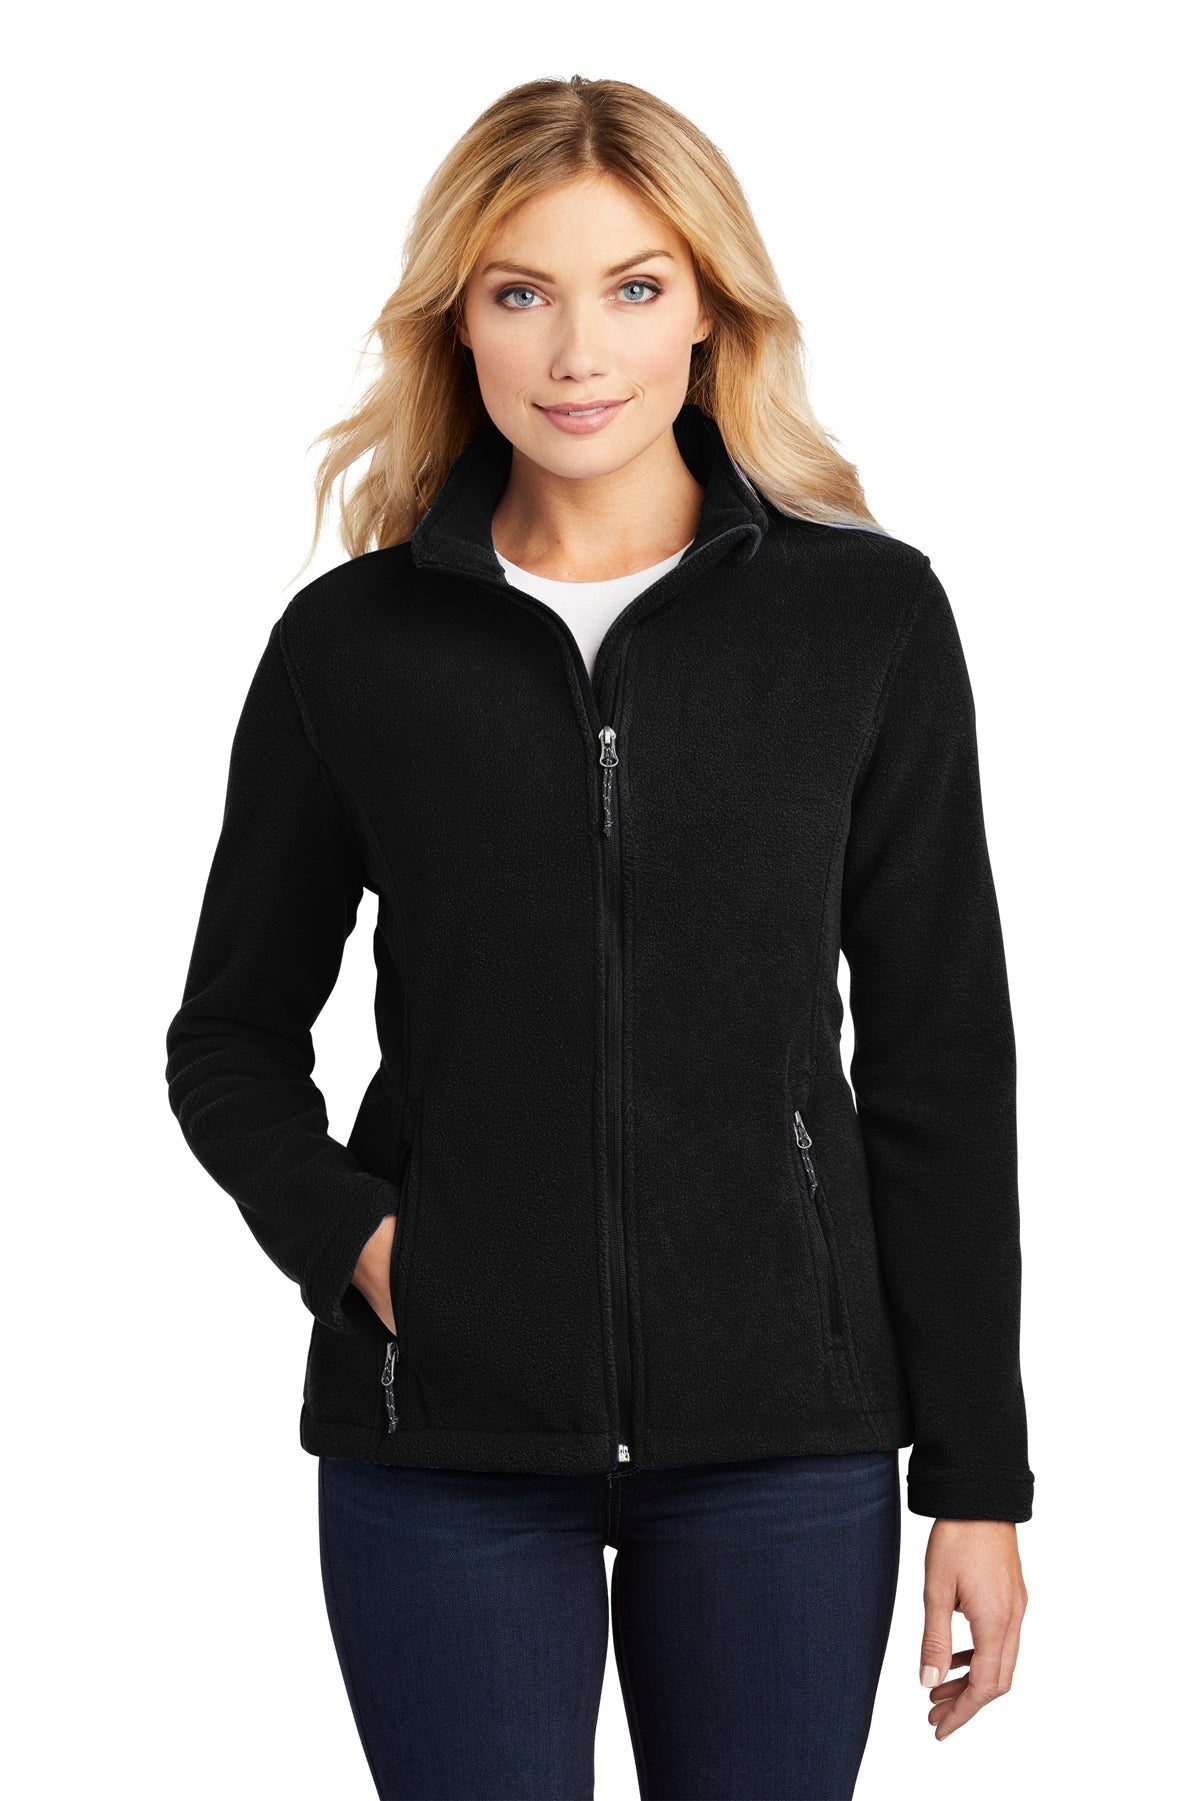 MEDSTAR L217 Port Authority® Ladies Value Fleece Jacket